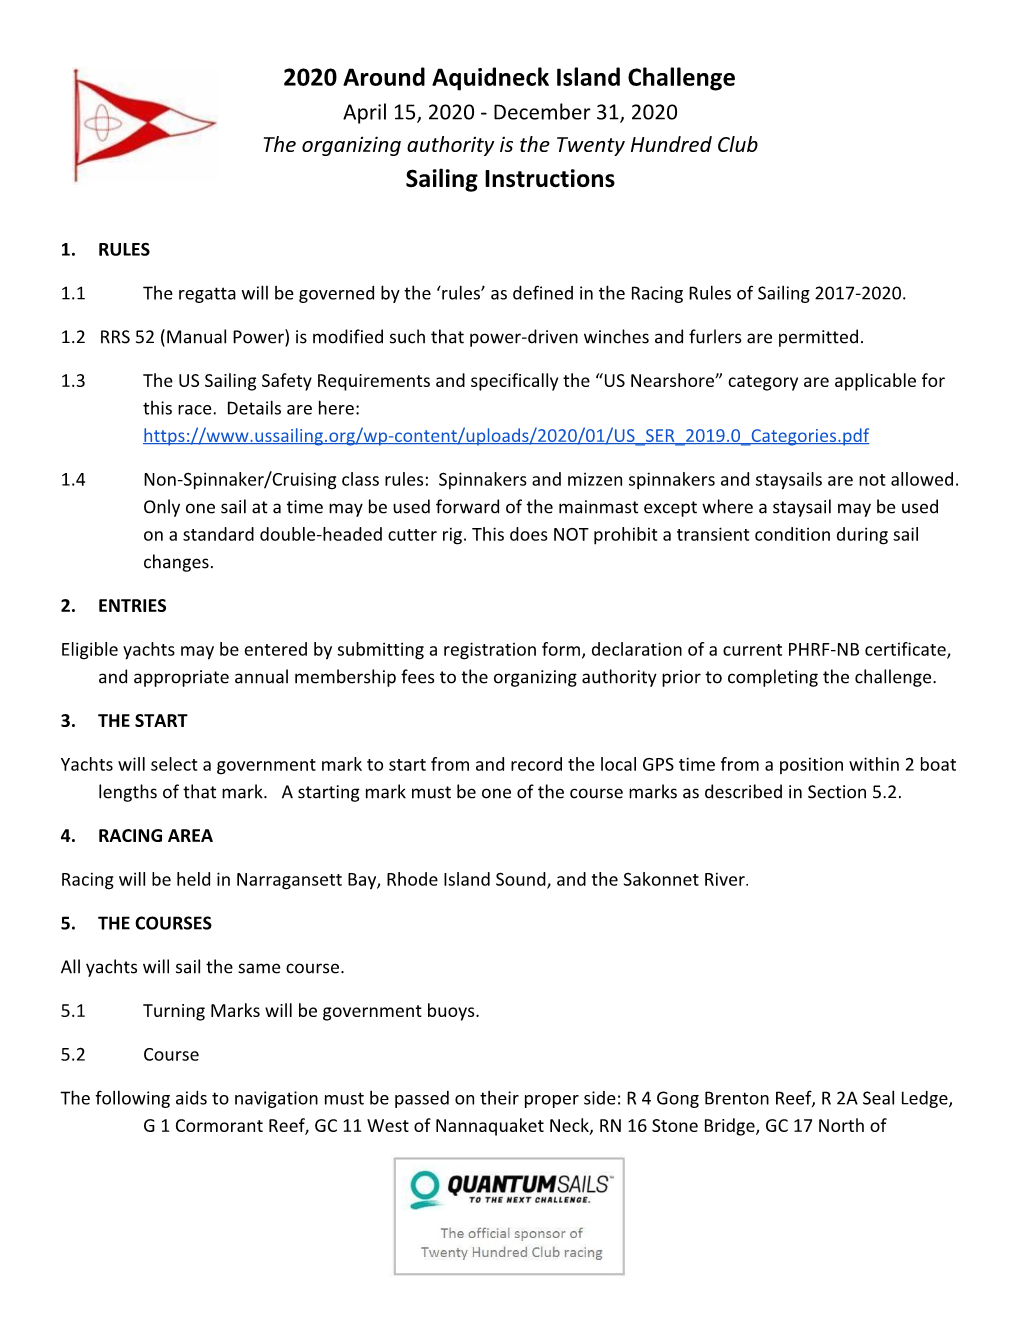 2020 Around Aquidneck Island Challenge Sailing Instructions